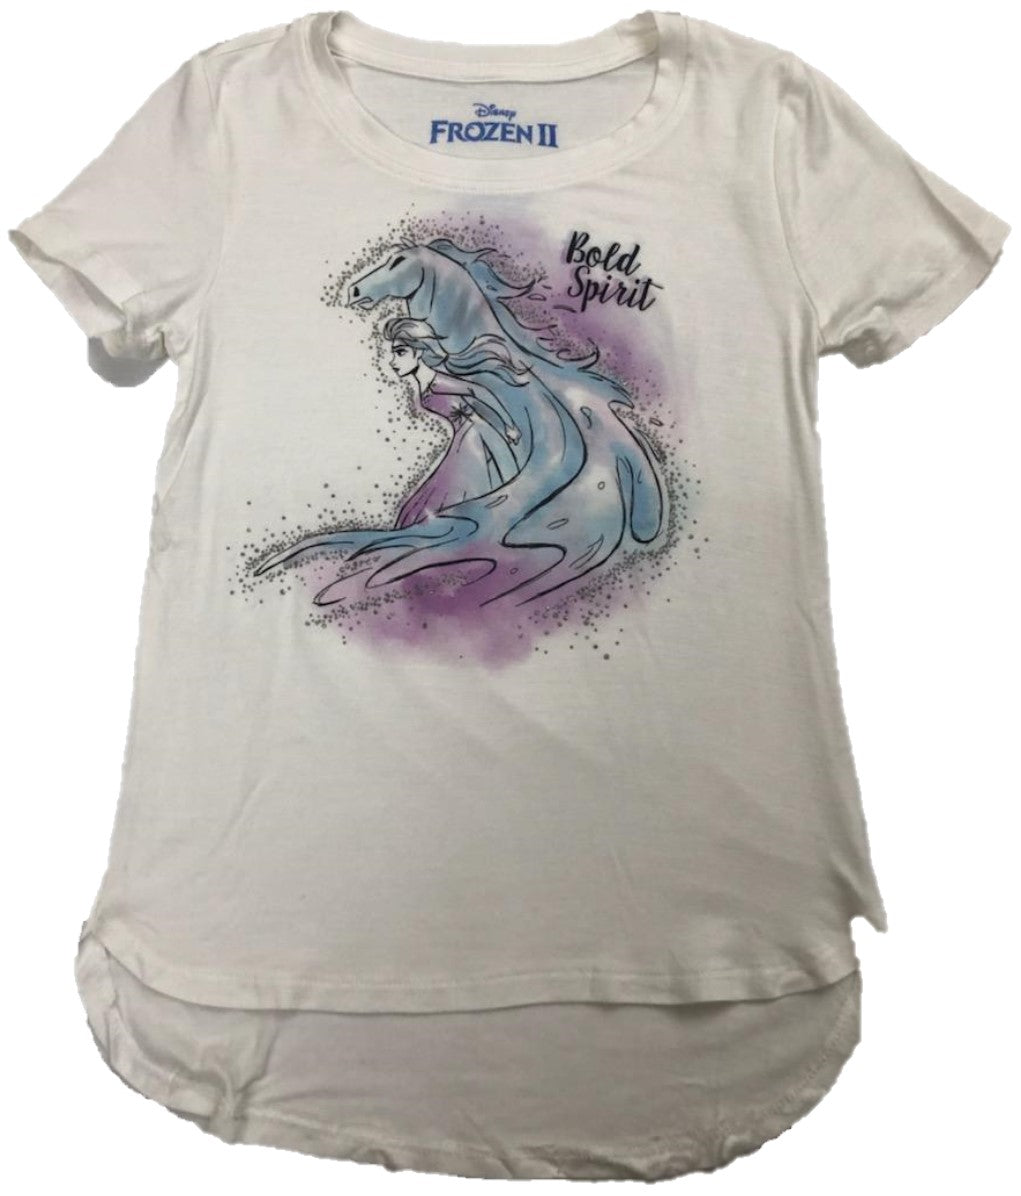 FROZEN ELSA BOLD SPIRIT HORSE Disney Walt Disney Girls T-Shirt